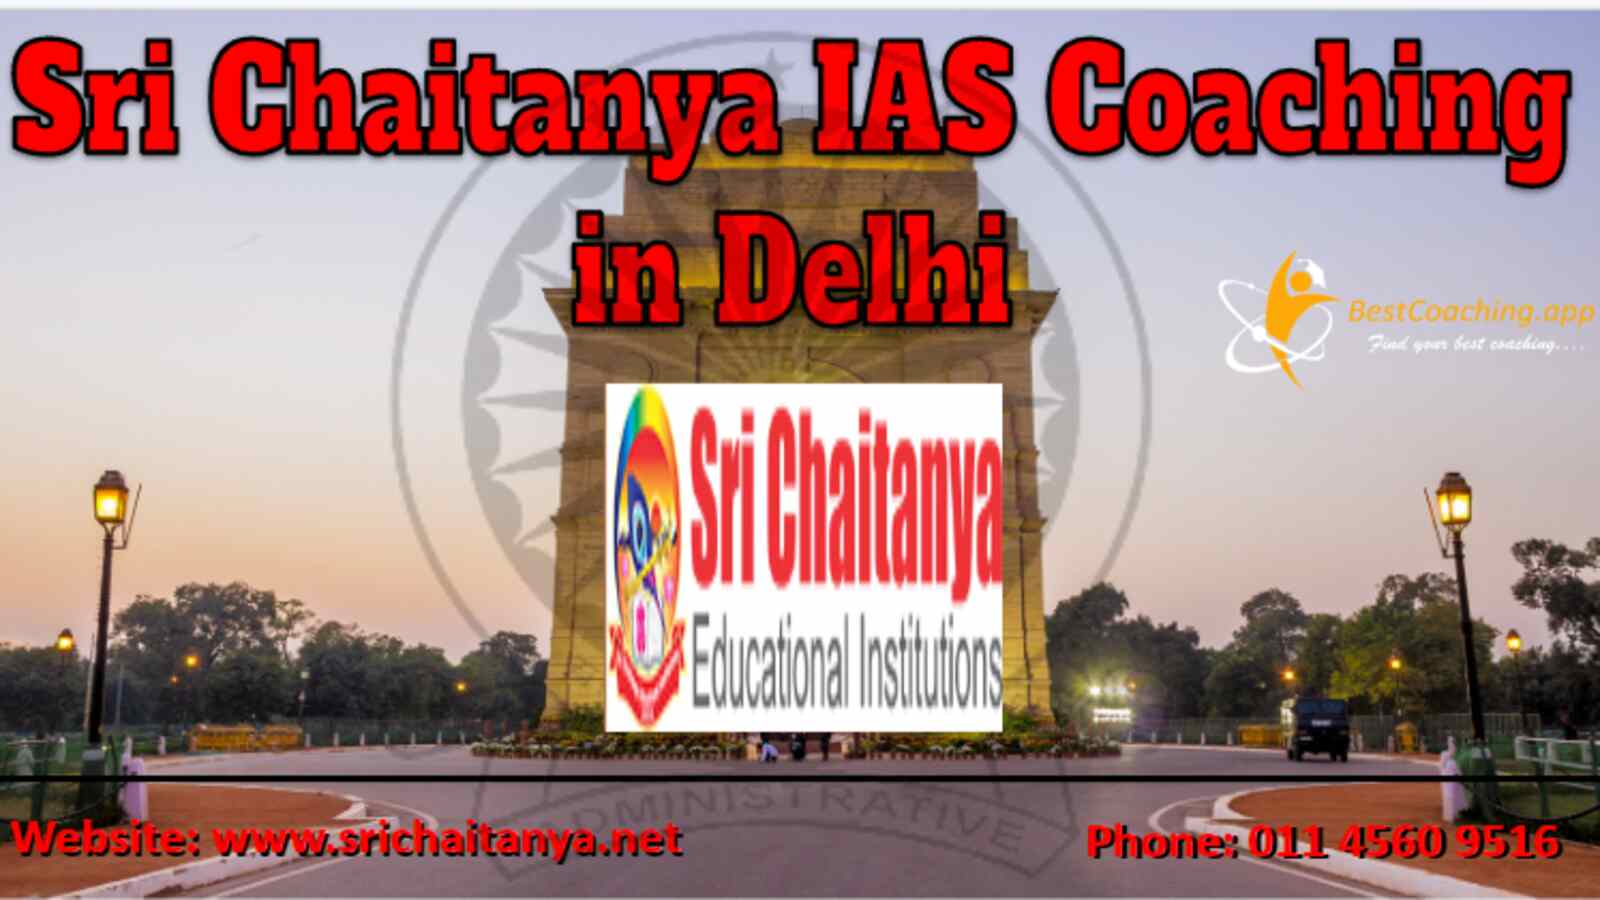 Sri Chaitanya IAS Coaching in Delhi